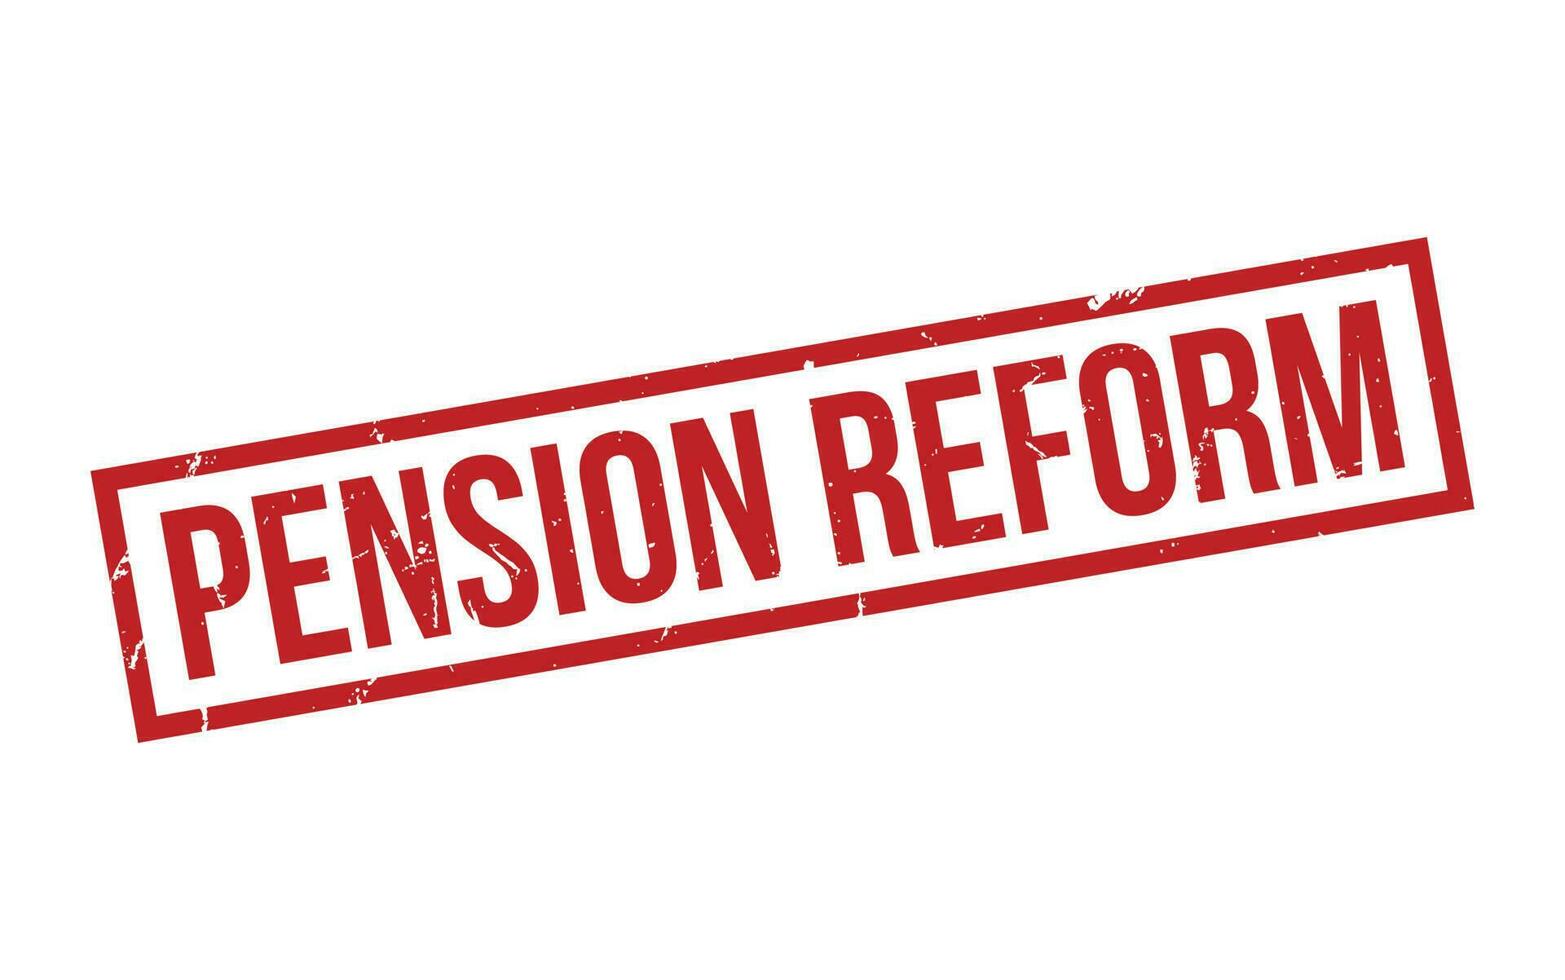 pensão reforma borracha carimbo foca vetor